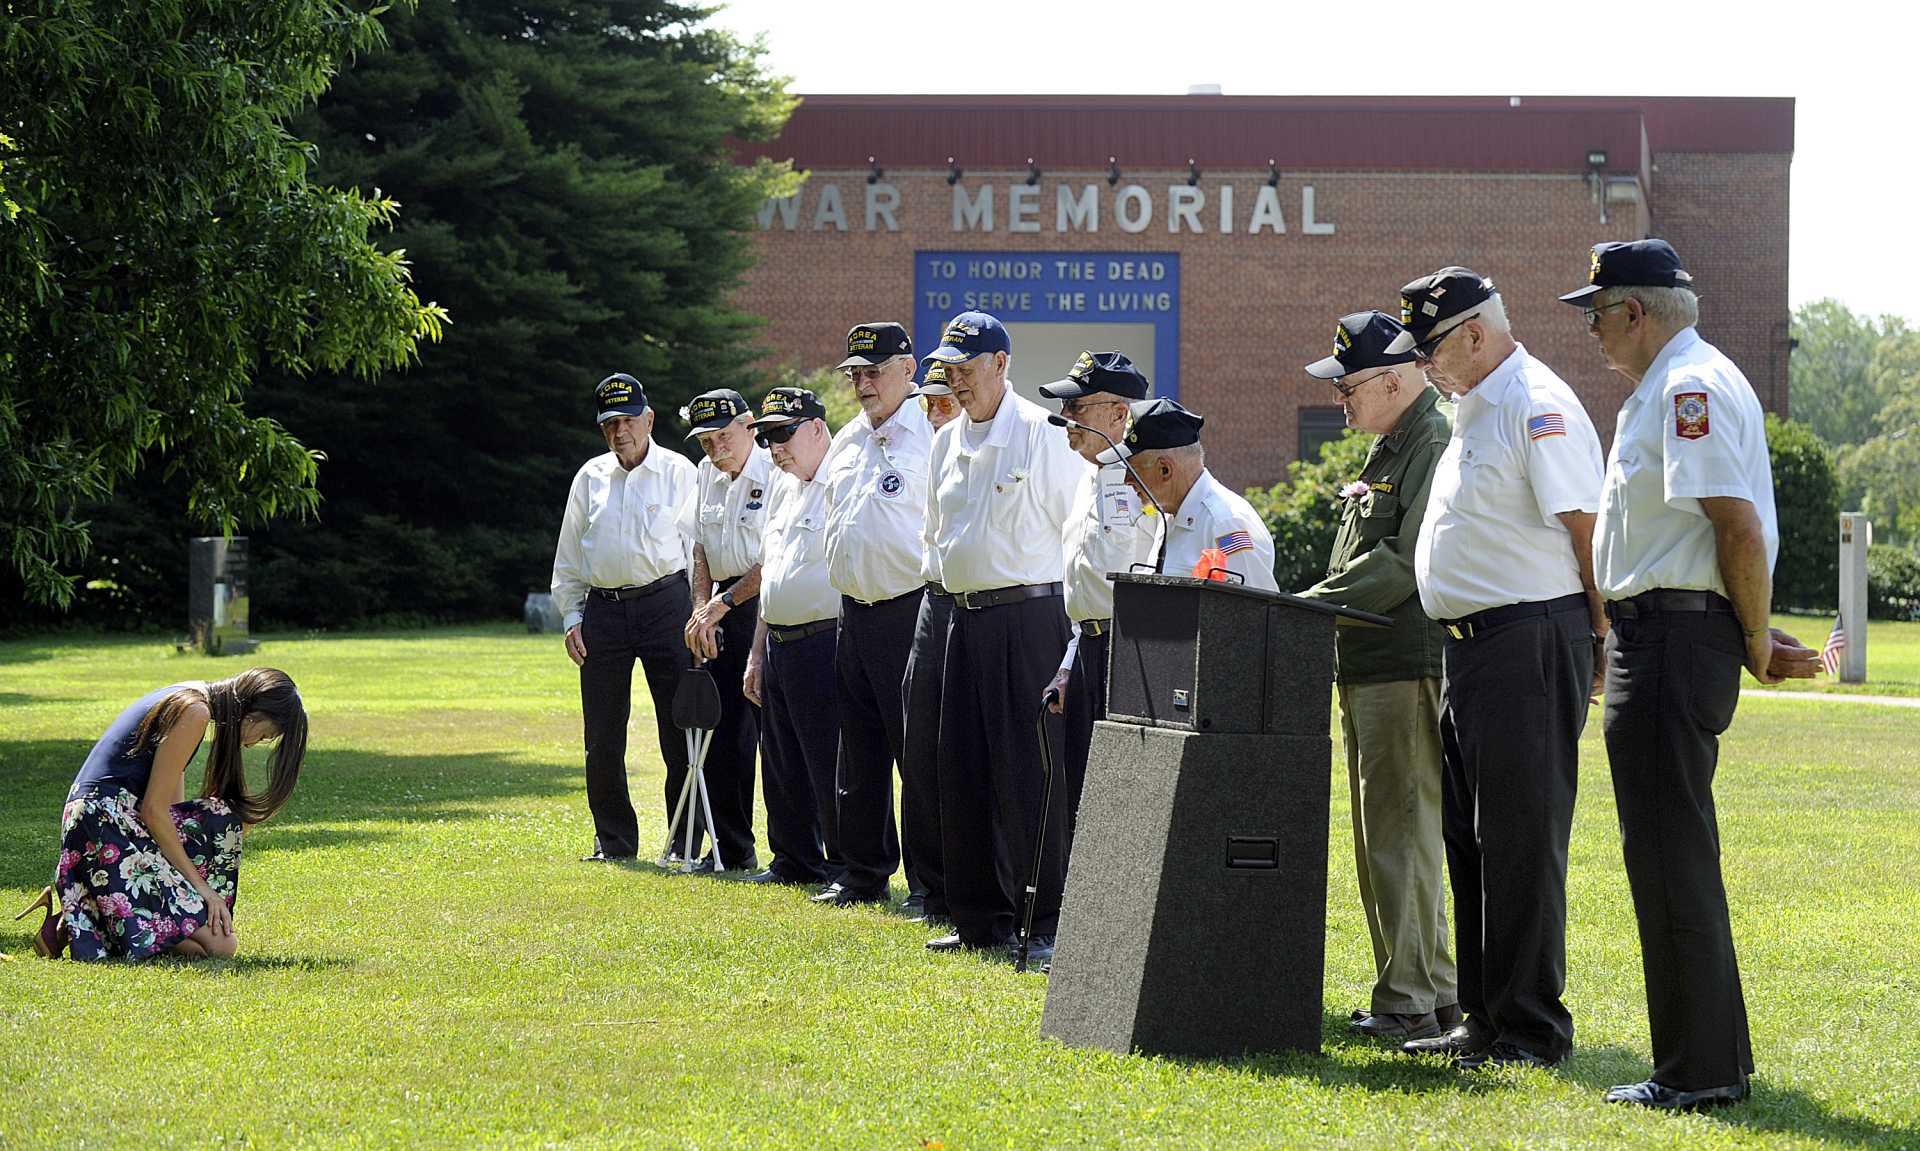 Korean-American Hannah Y Kim bows in respect to the veterans of the Korean War.